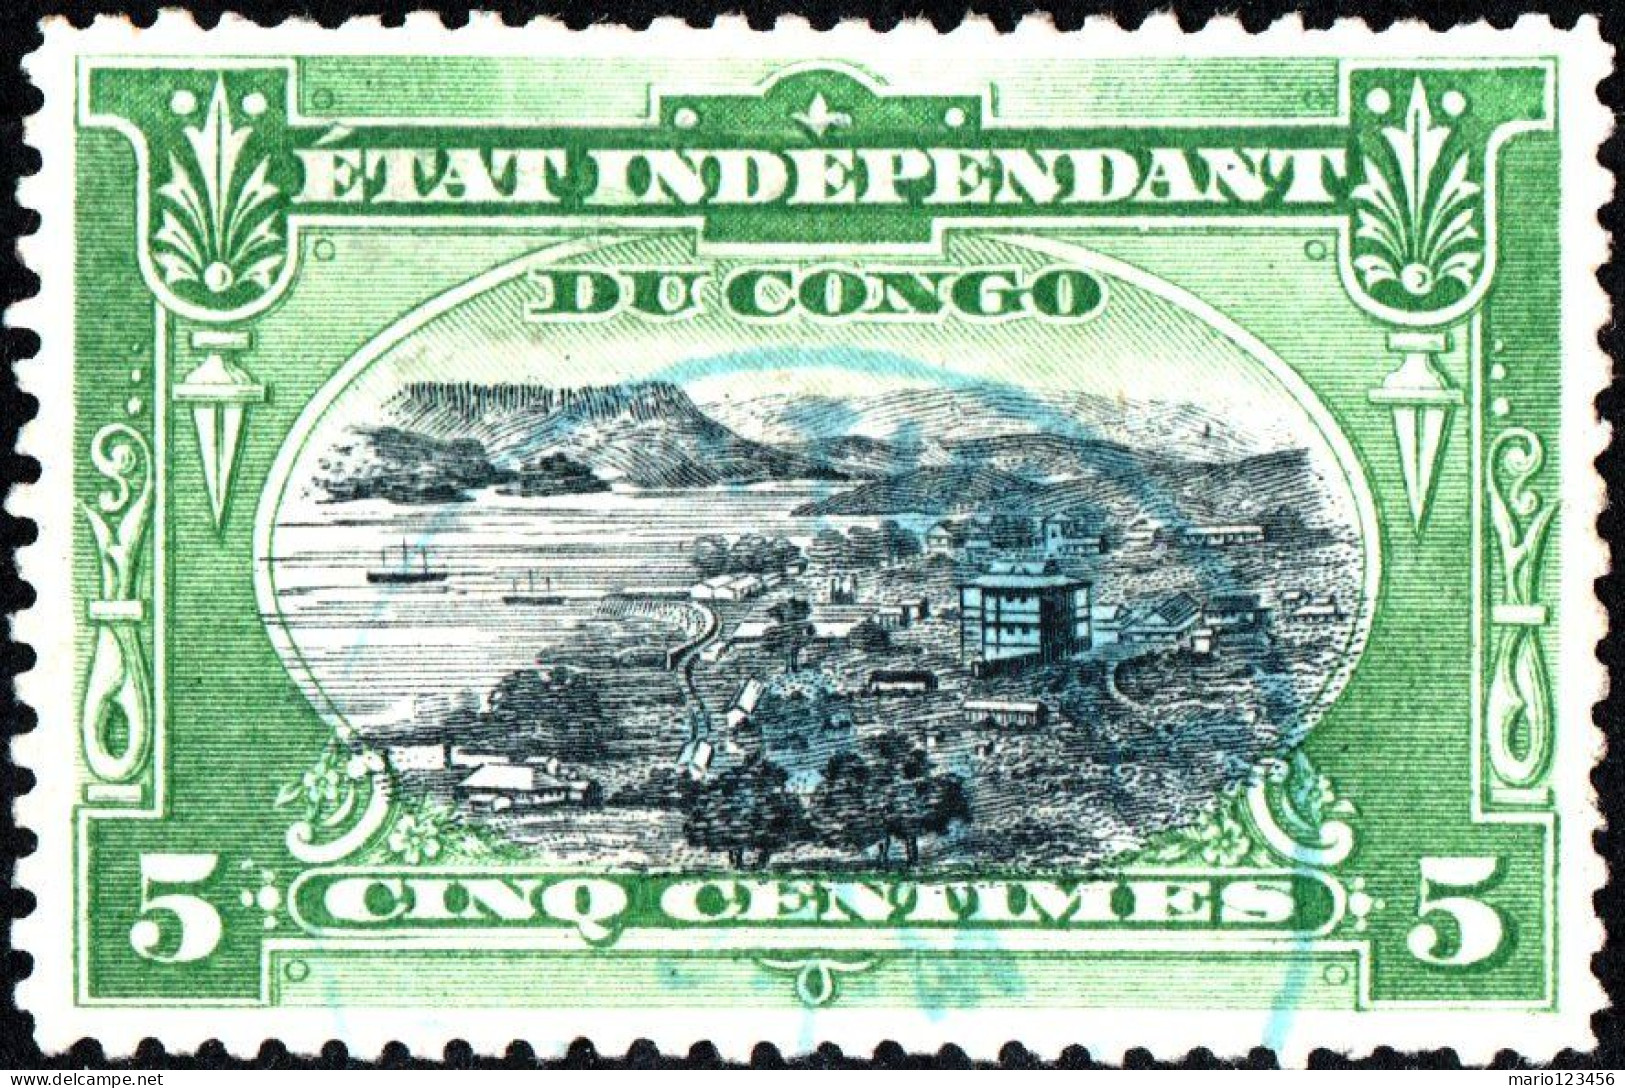 CONGO BELGA, BELGIAN CONGO, PAESAGGI, LANDSCAPE, 1900, USATI Mi:CD-FS 26, Scott:CD-FS 16, Yt:CD-FS 16 - Used Stamps